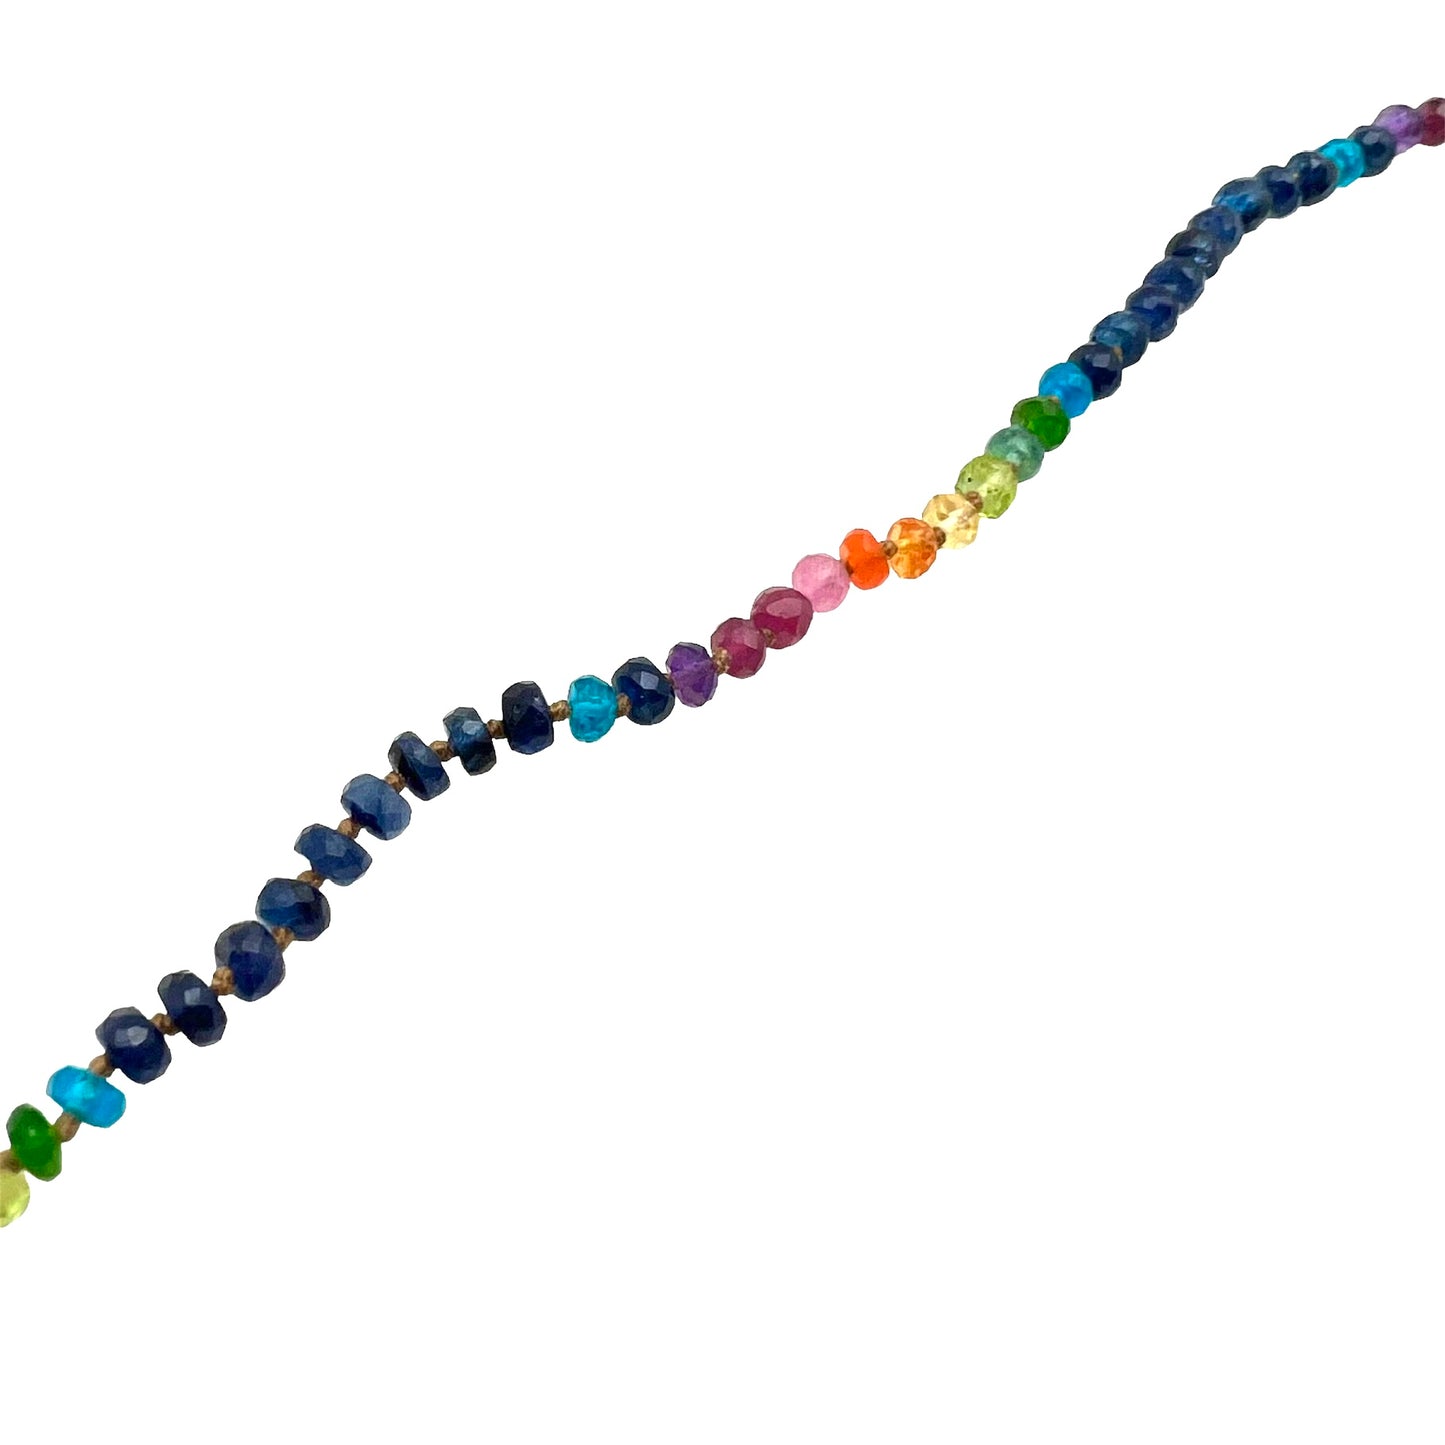 Midnight Sapphire Rainbow Bracelet